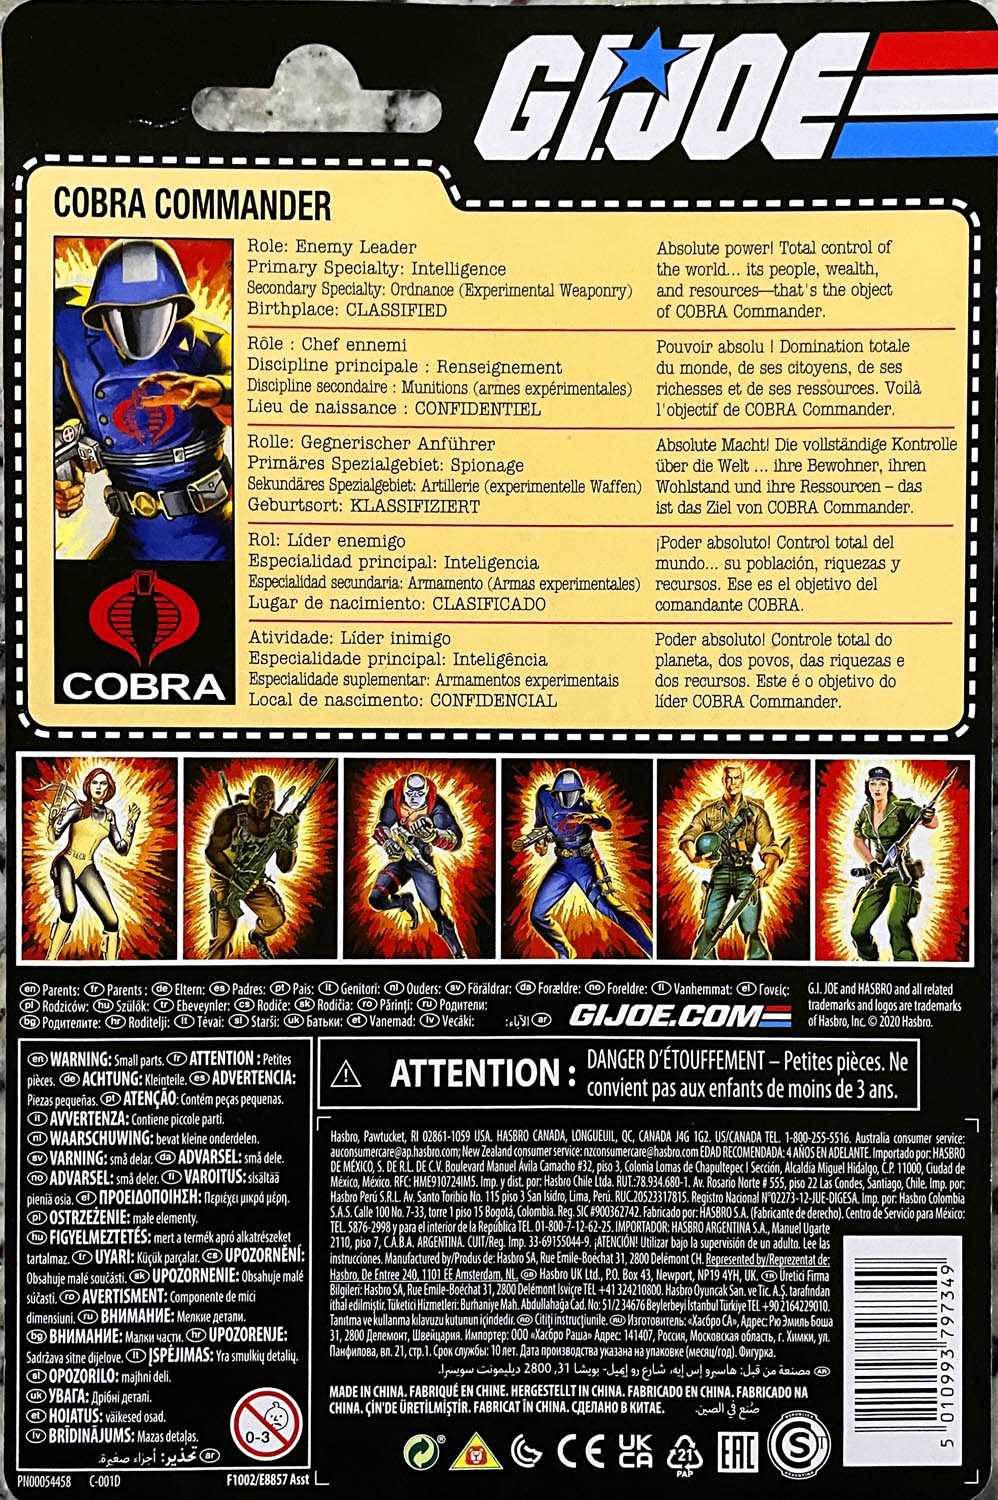 Cobra Commander - Hasbro (G.I. Joe Retro Collection) action figure collectible - Main Image 2